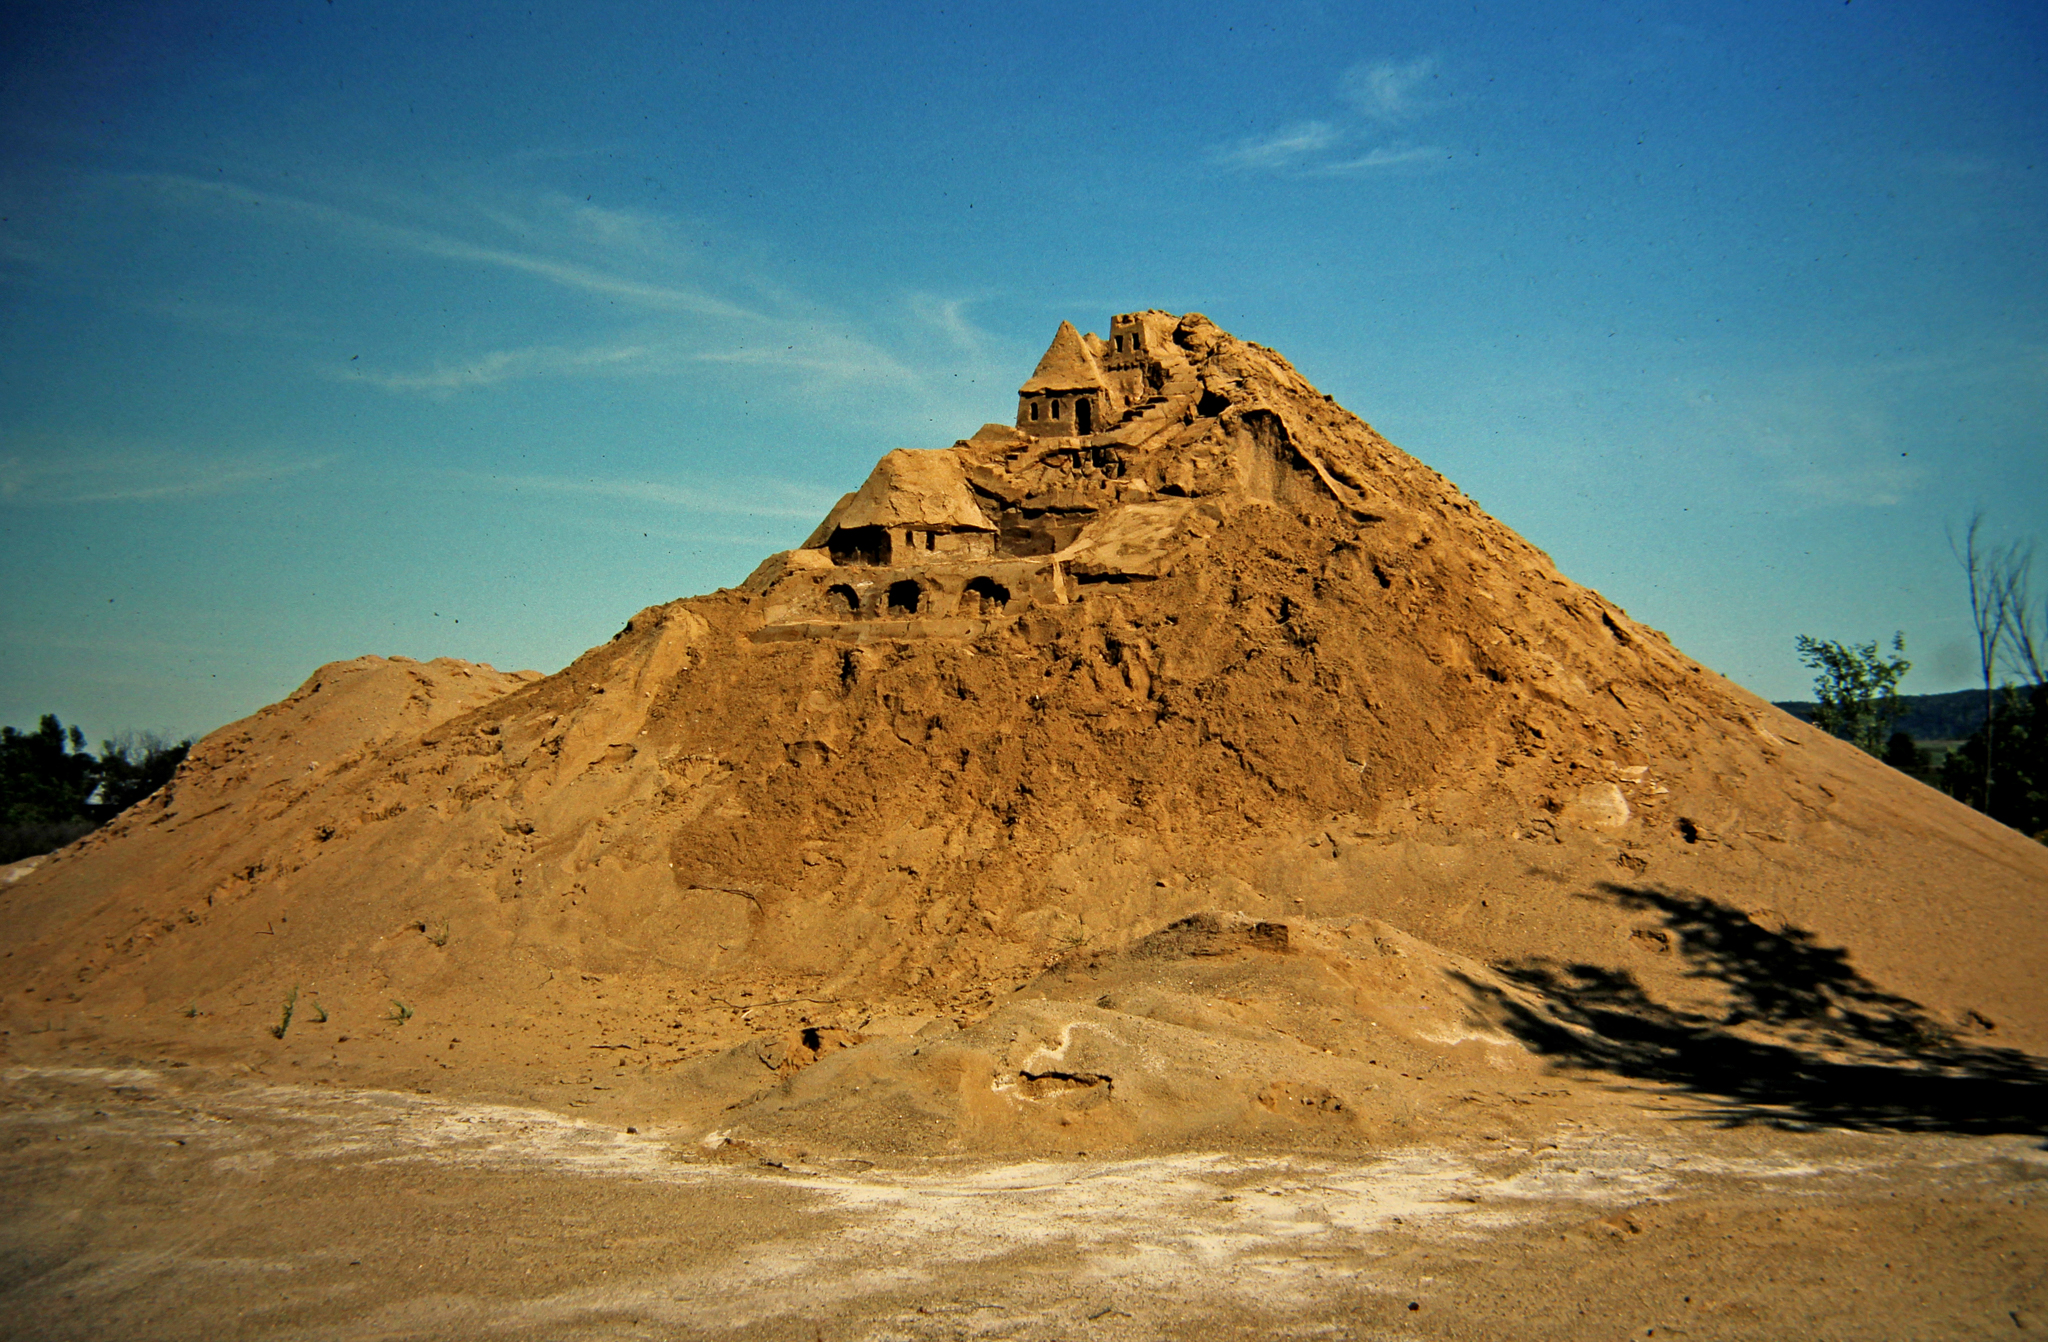 Sand castle in DOT sand pile